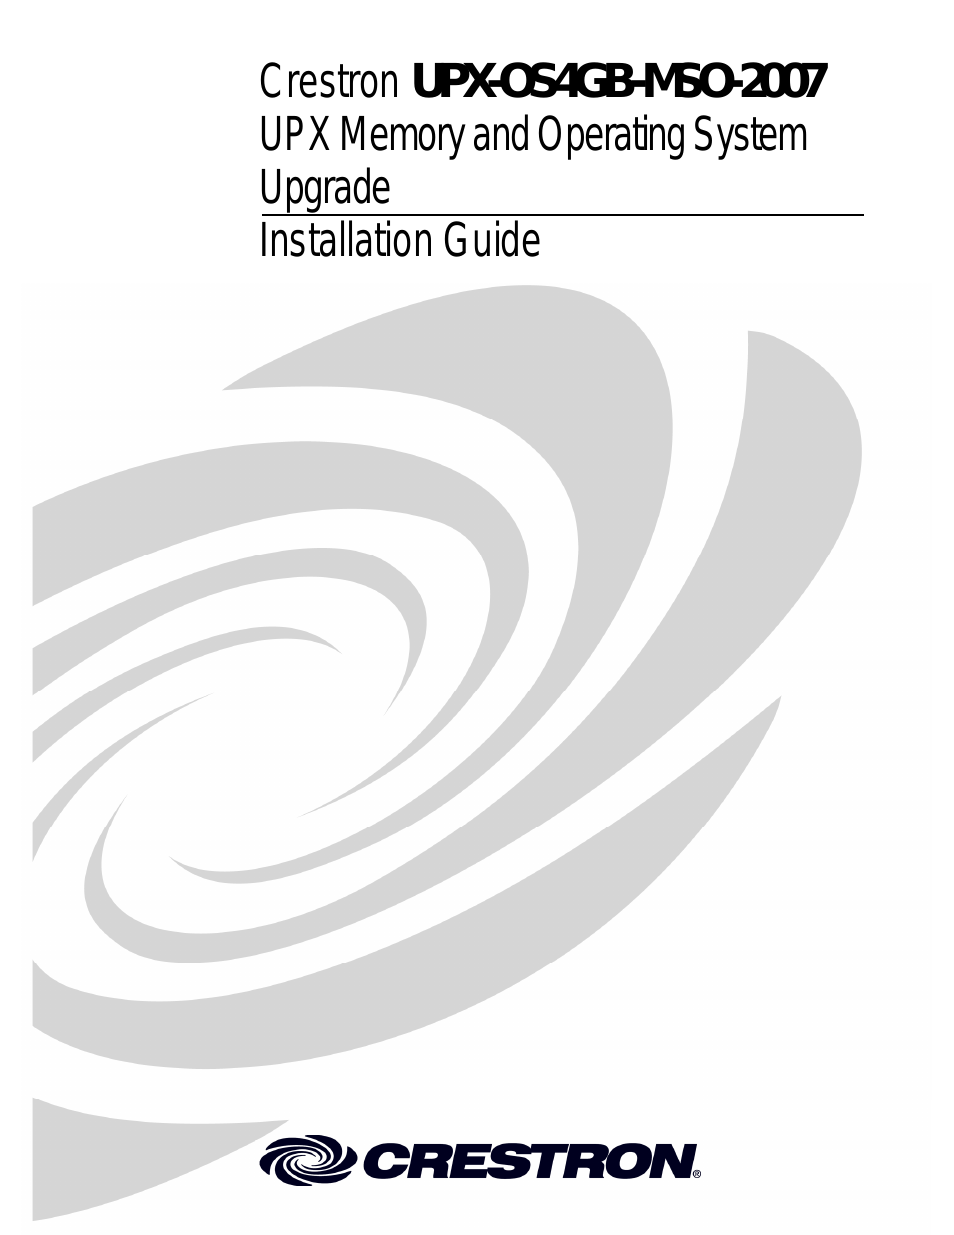 UPX-OS4GB-MSO-2007